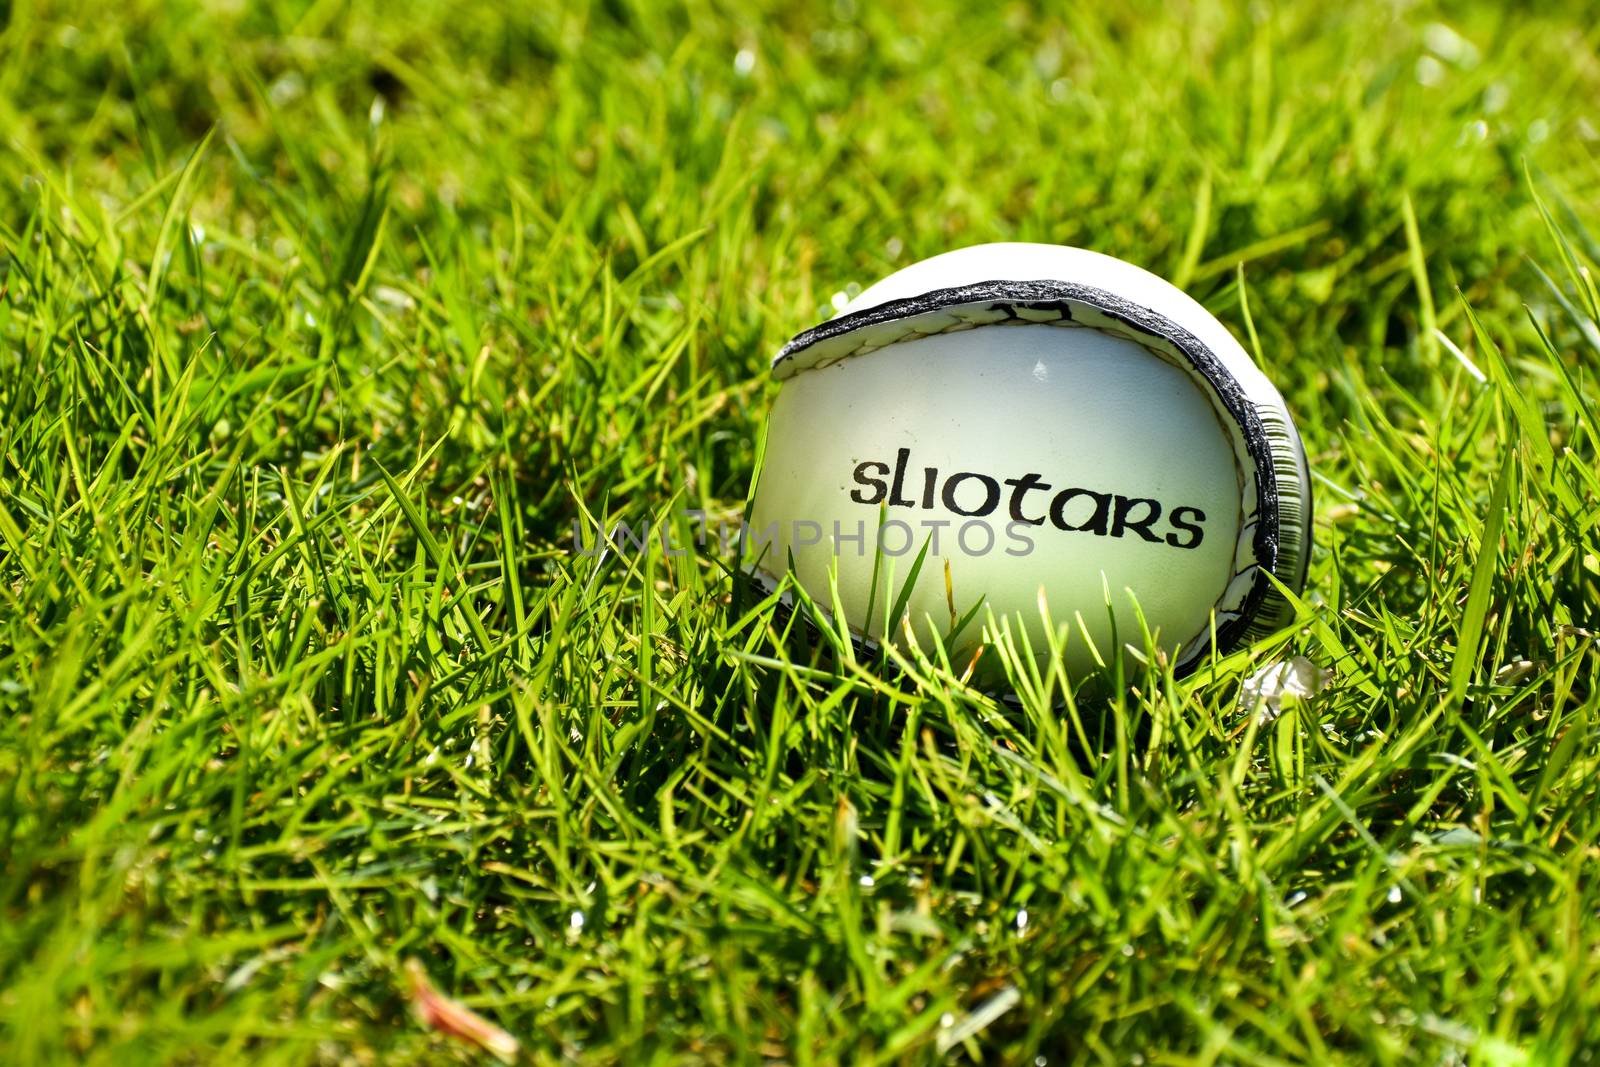 Irish Hurling or Camogie sliotar ball on a grass playing field